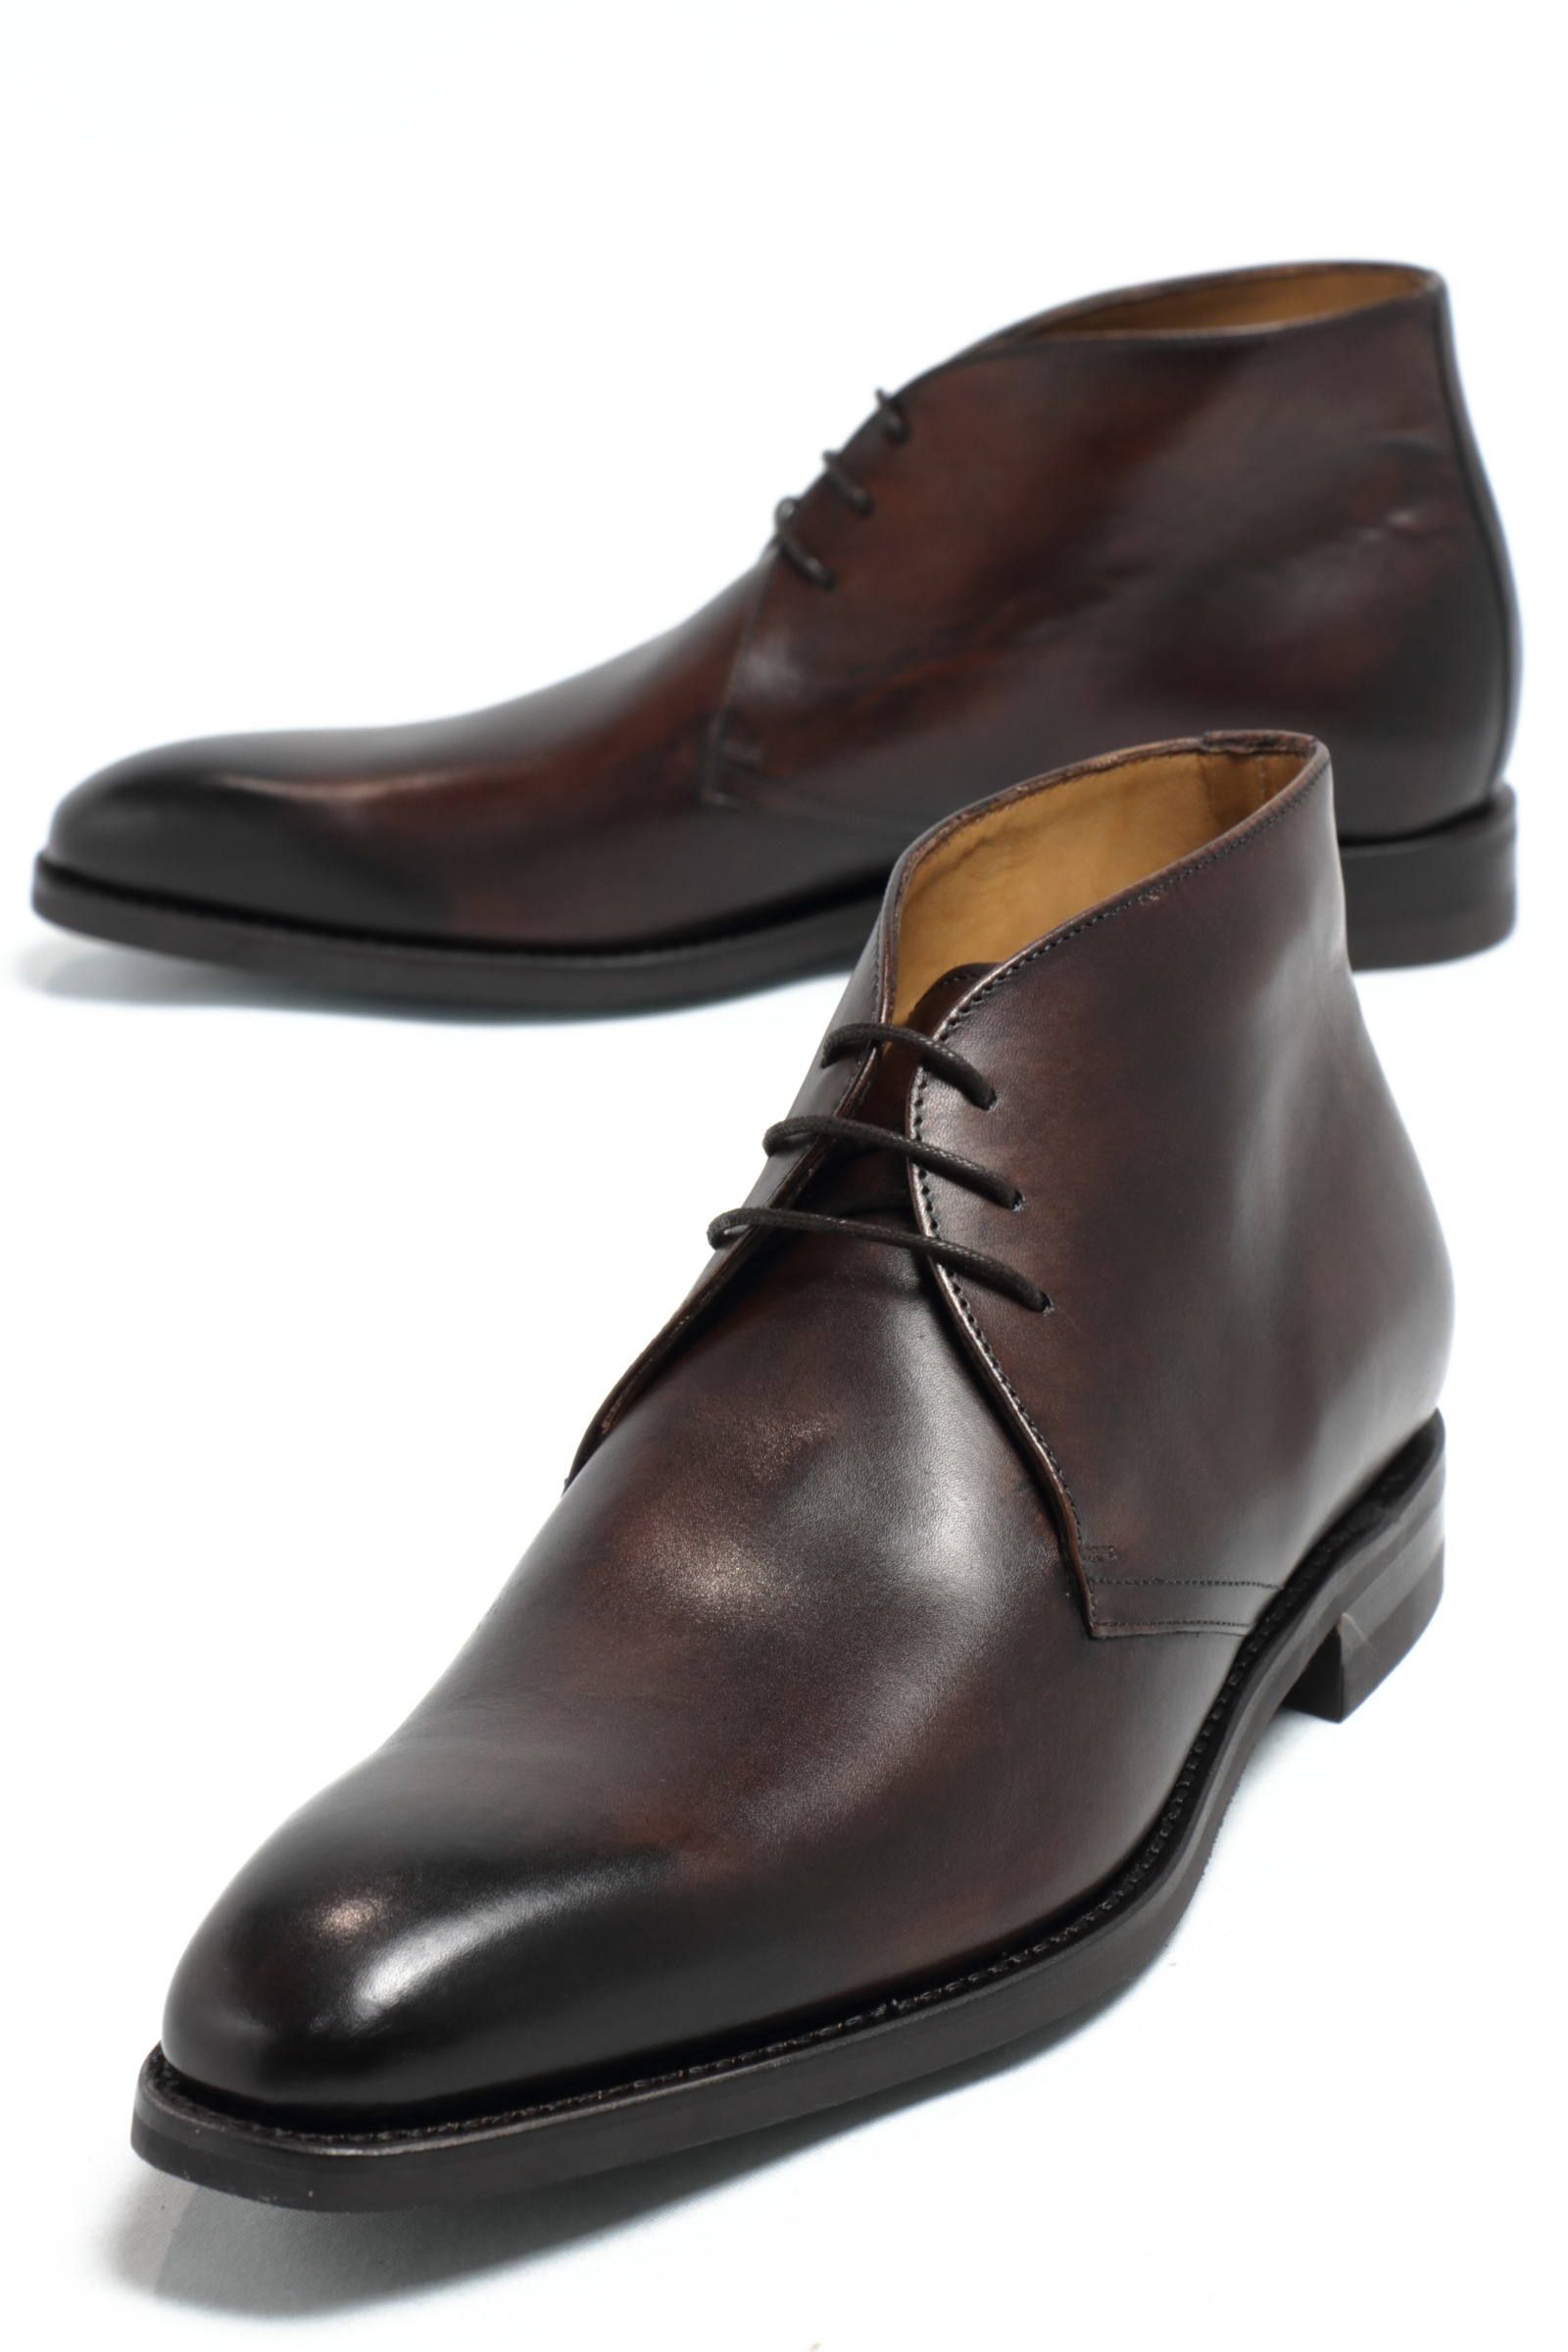 Berwick 1707 - ダイナイトソール ボックスカーフレザー ロングノーズ チャッカブーツ 革靴 / ダークブラウン TESTA |  BEKKU HOMME